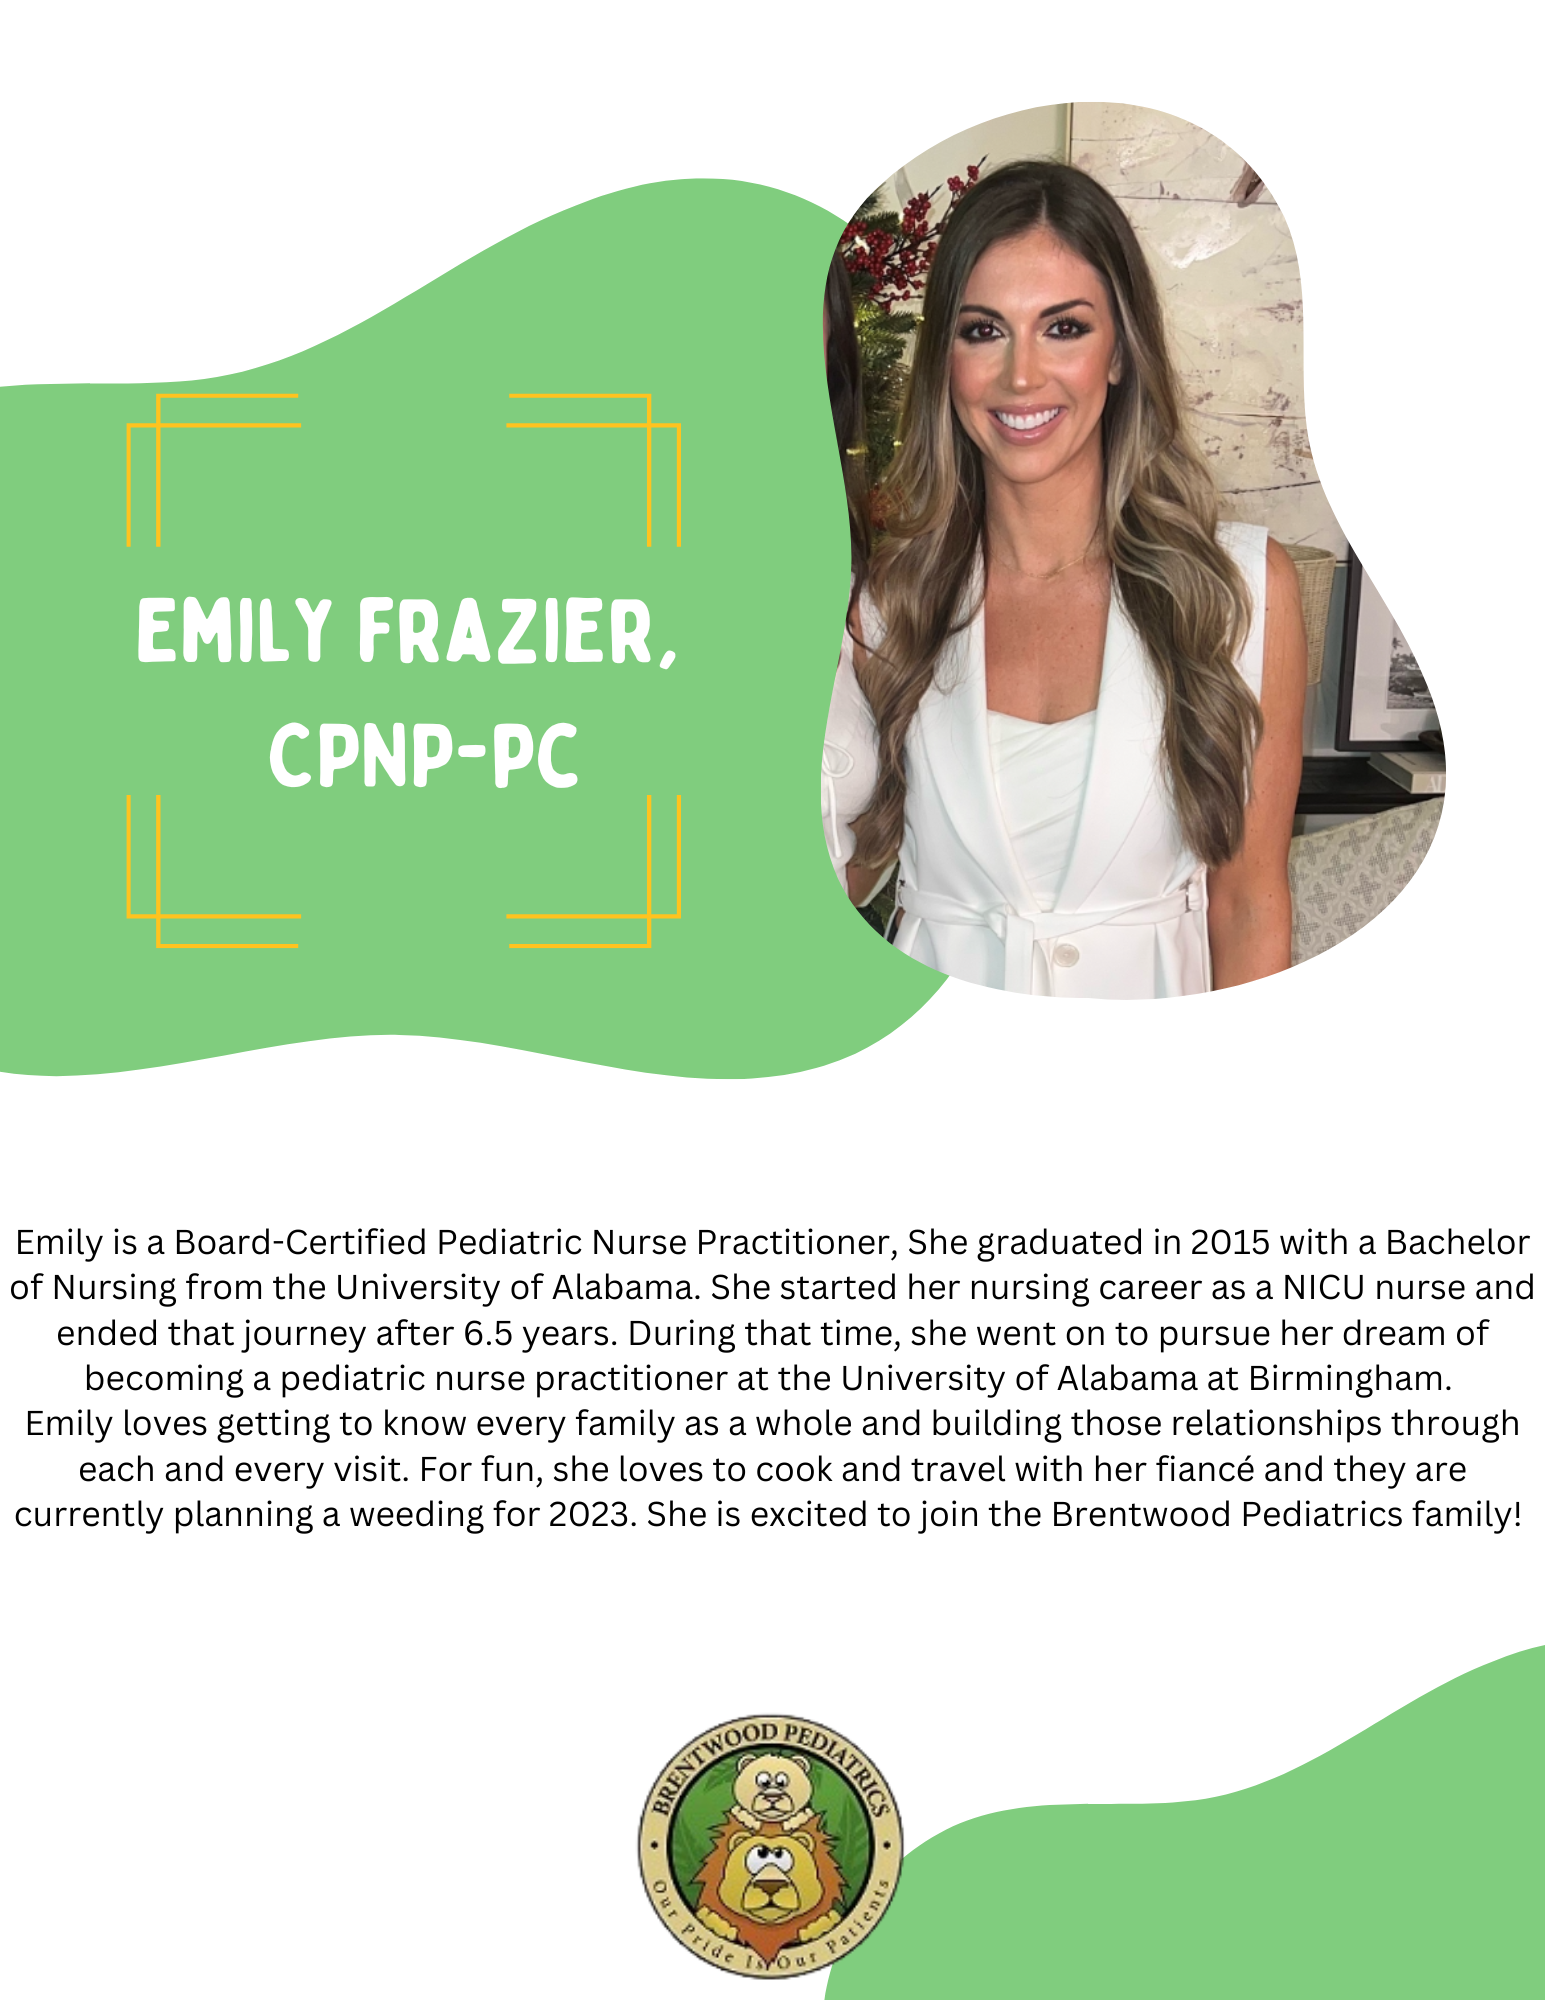 Emily Frazier, CPNP-PC